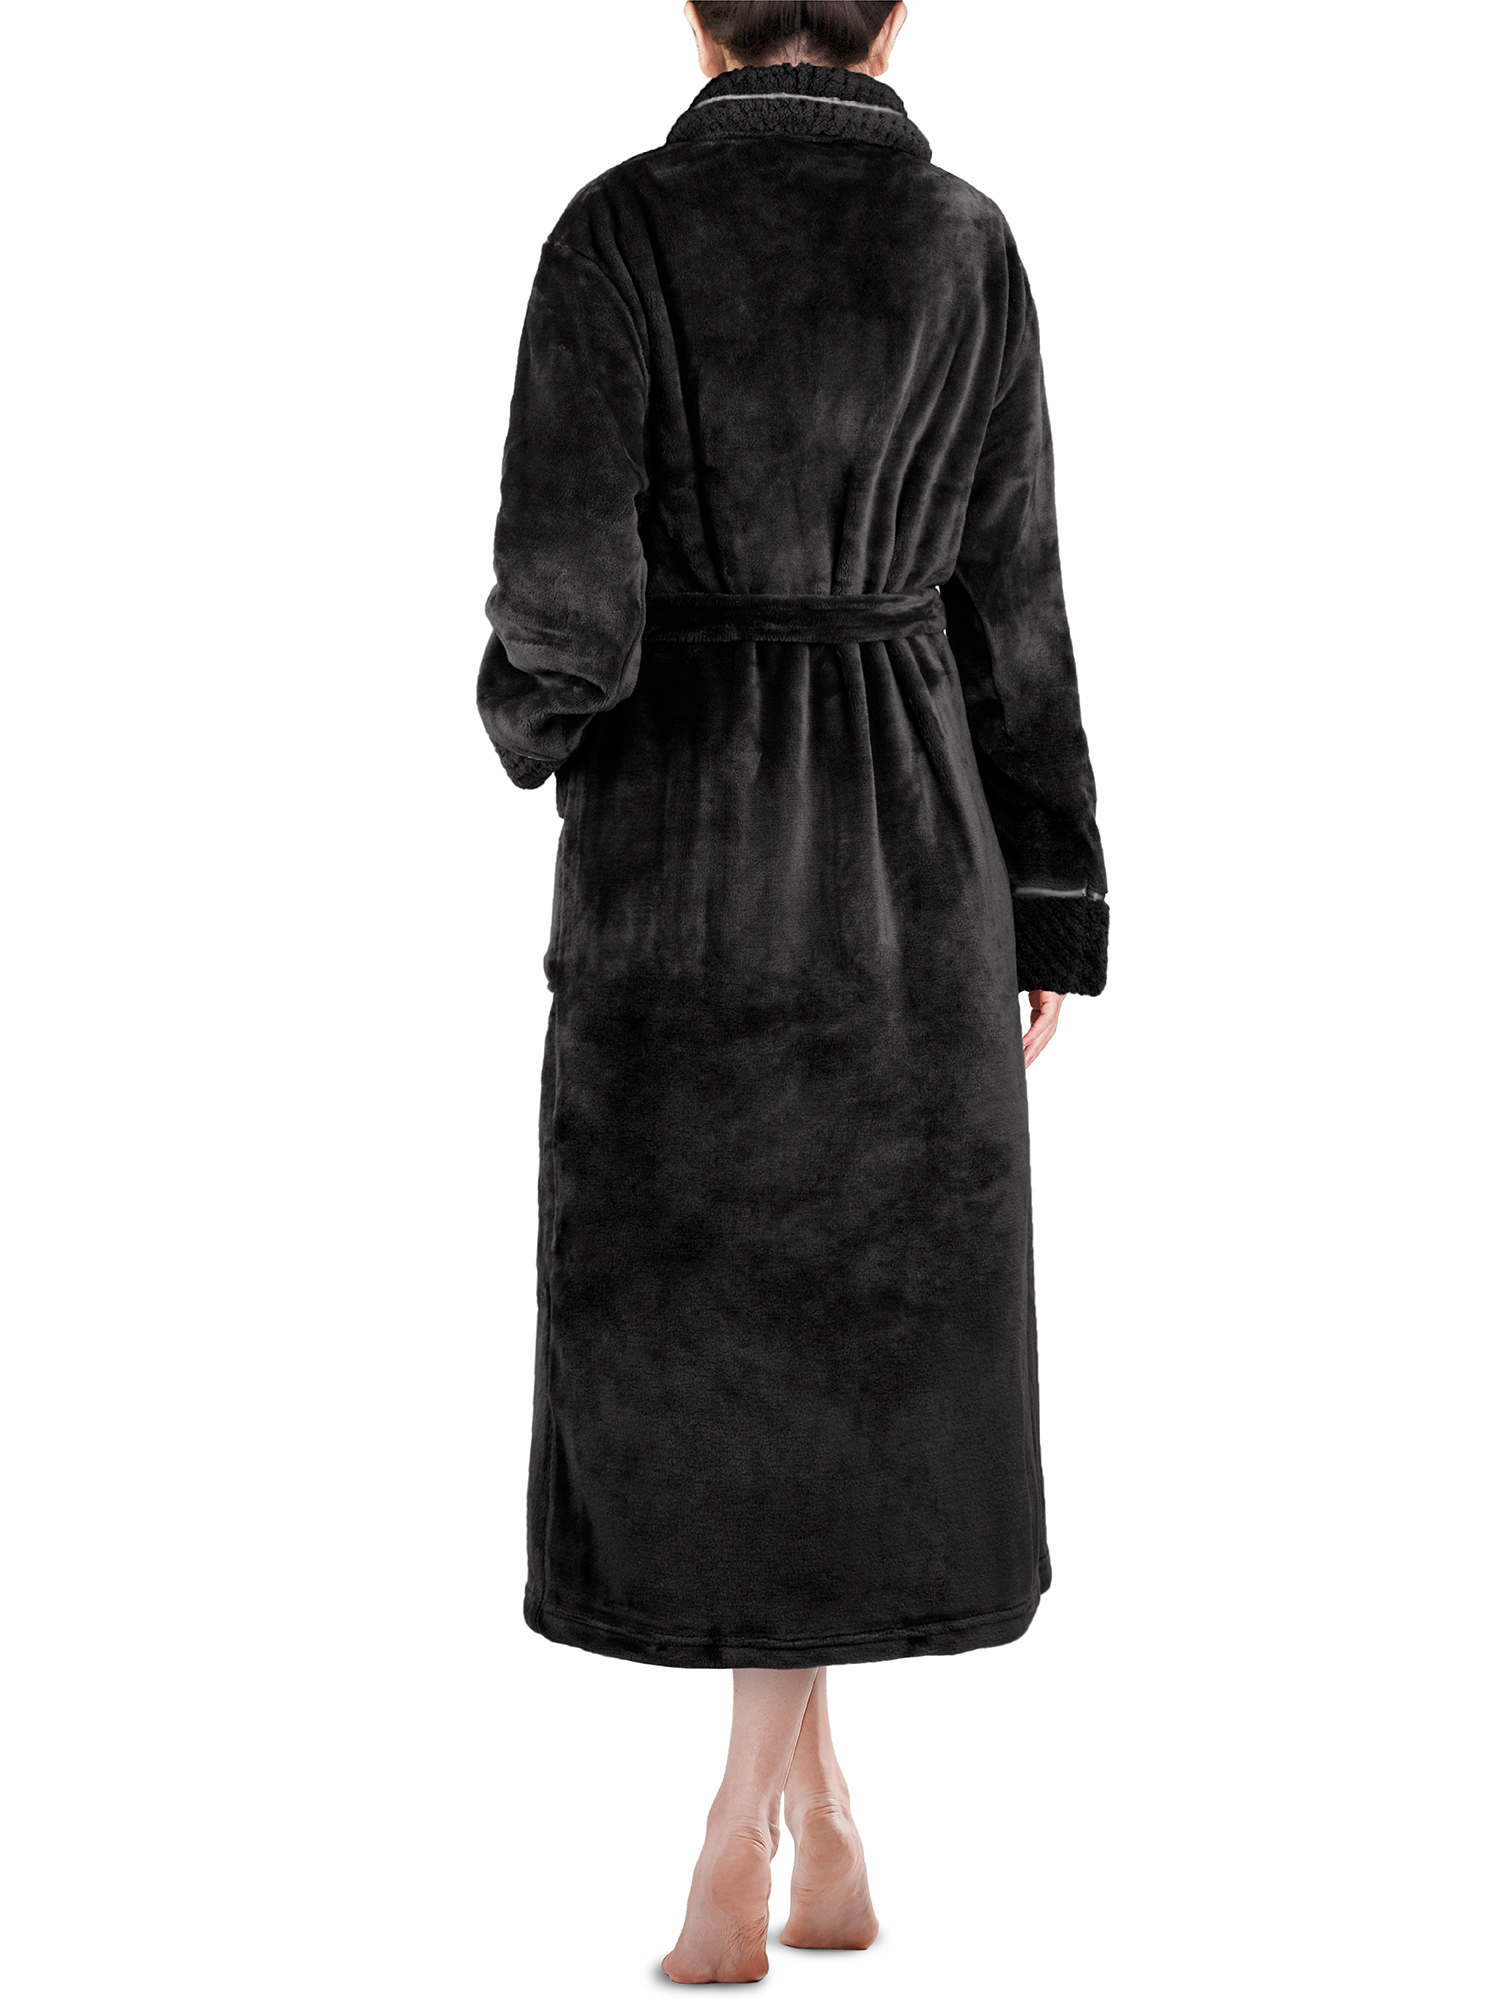 PAVILIA Soft Plush Women Fleece Robe, Black Cozy Bathrobe, Female Long Spa Robe, Warm Housecoat, Satin Waffle Trim, S/M - image 2 of 8